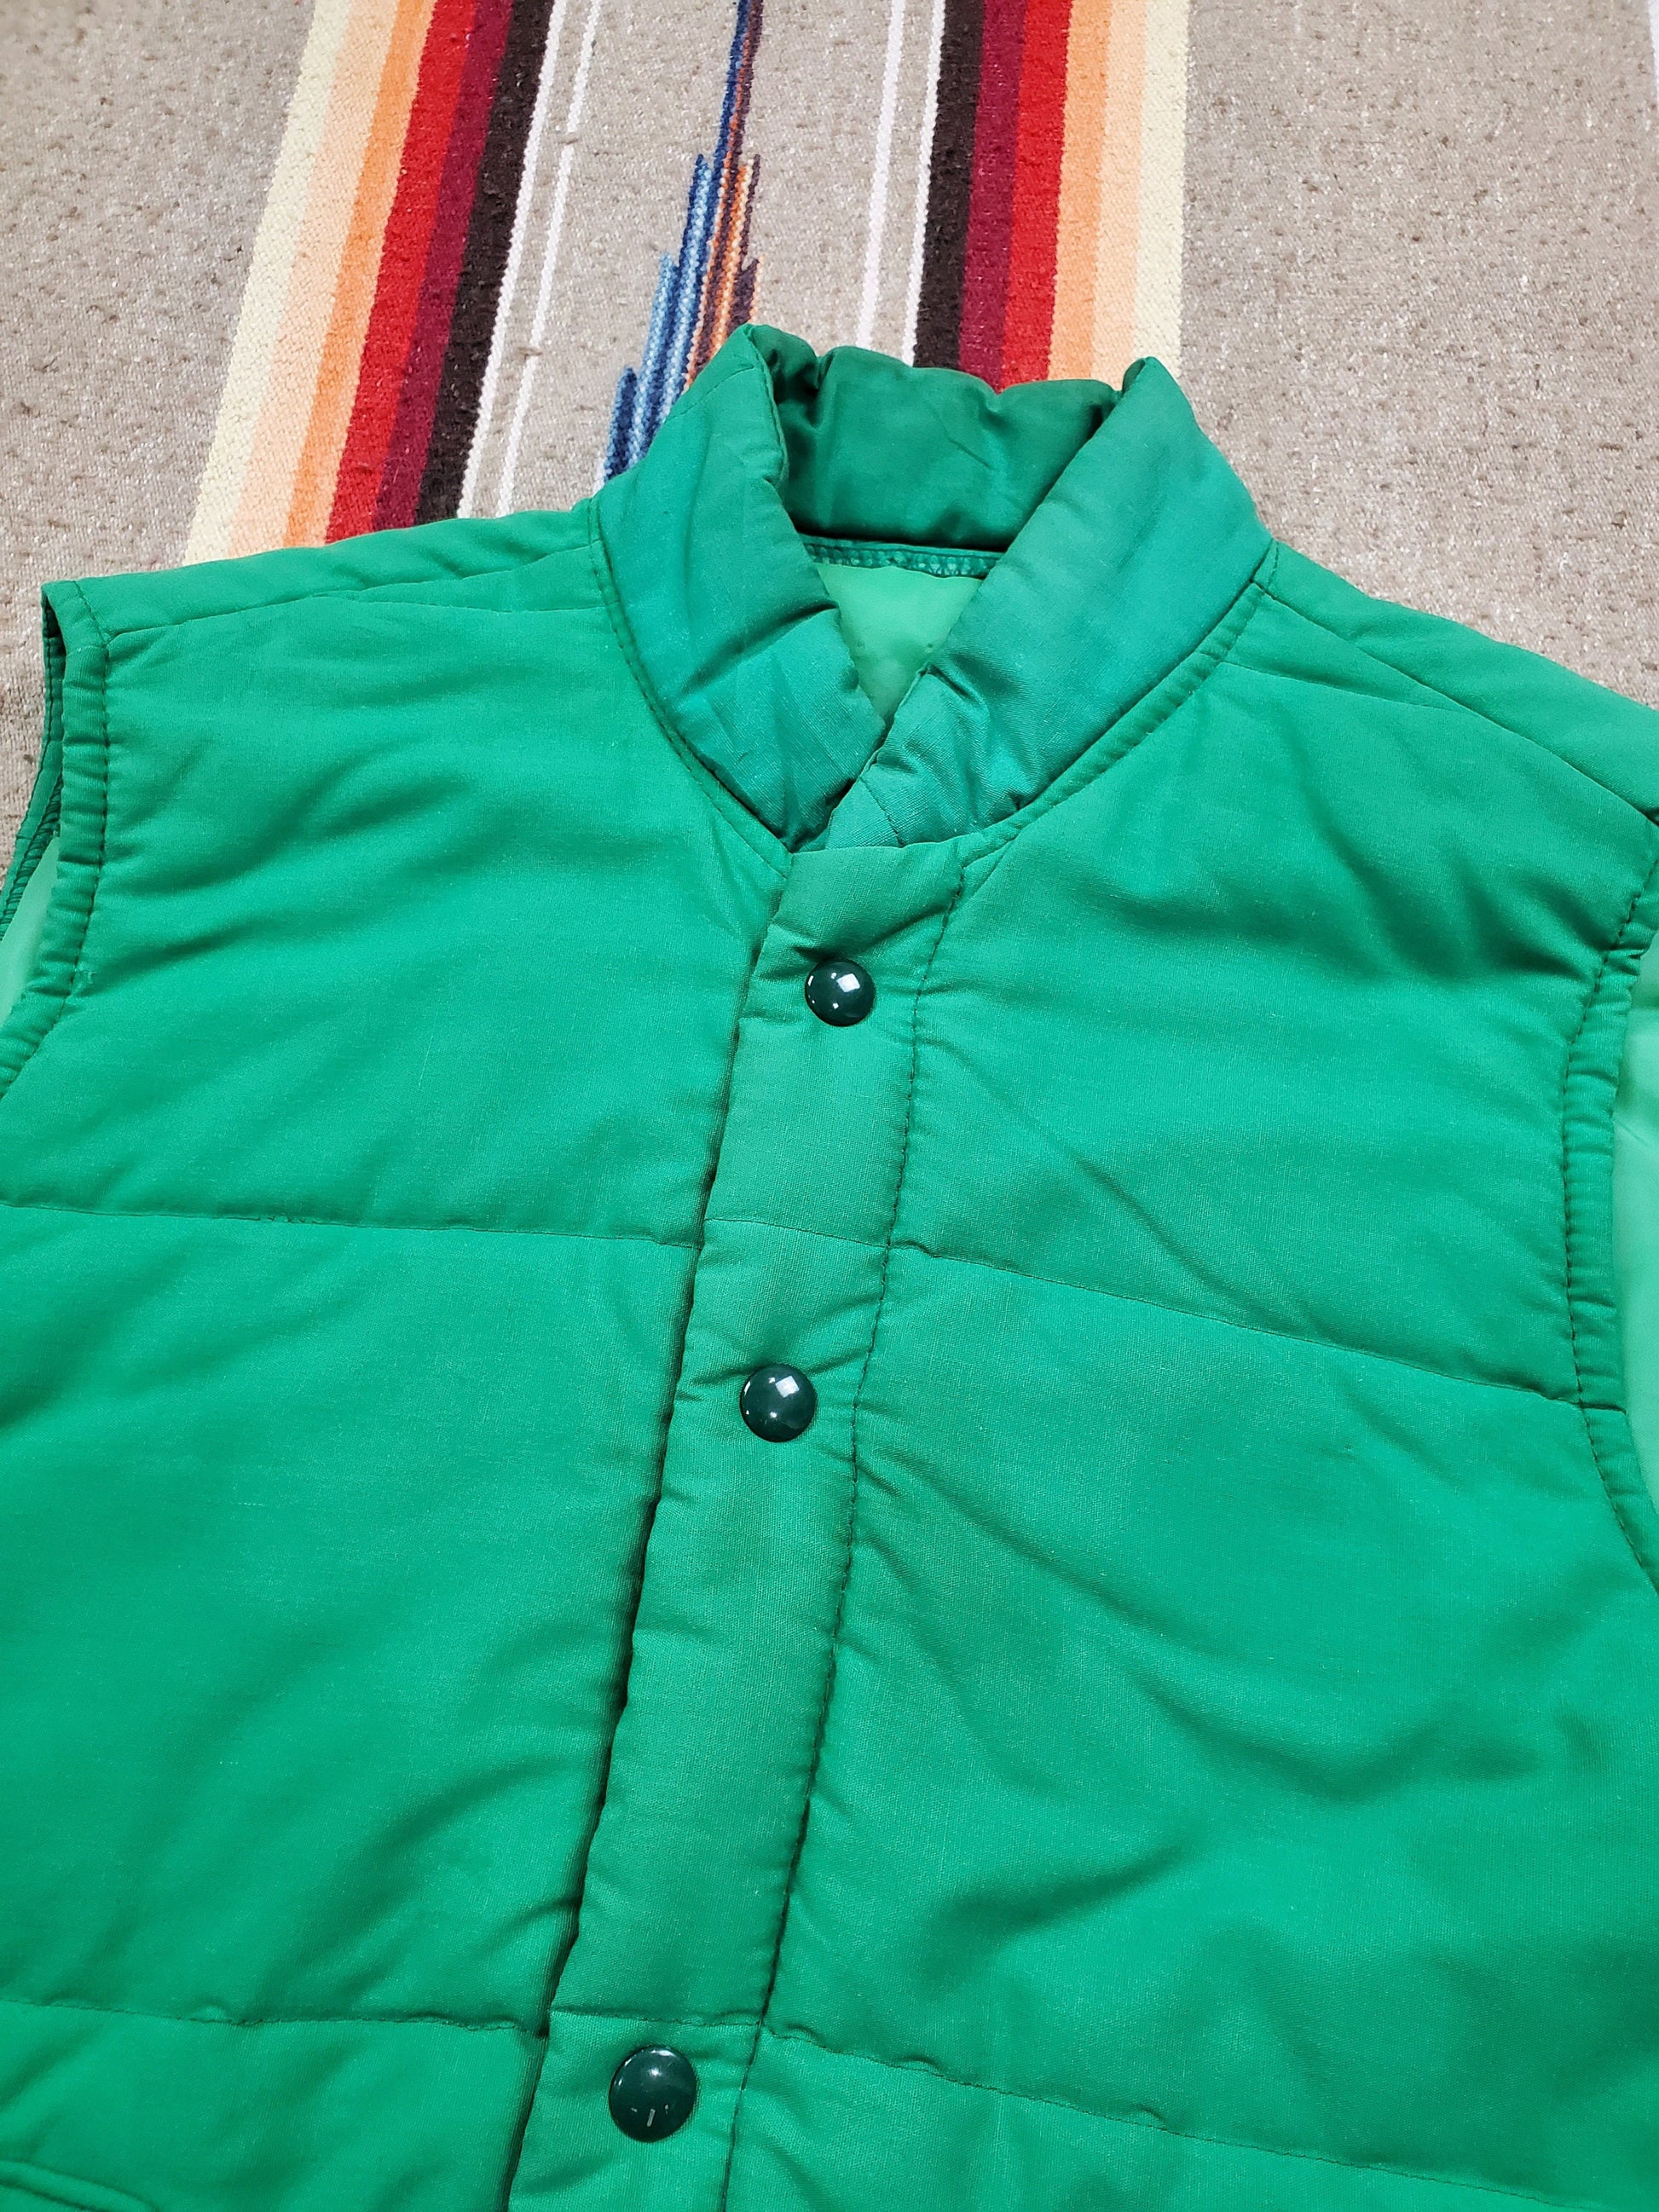 1980s/1990s Unbranded Green Puffer Vest Jacket Size L